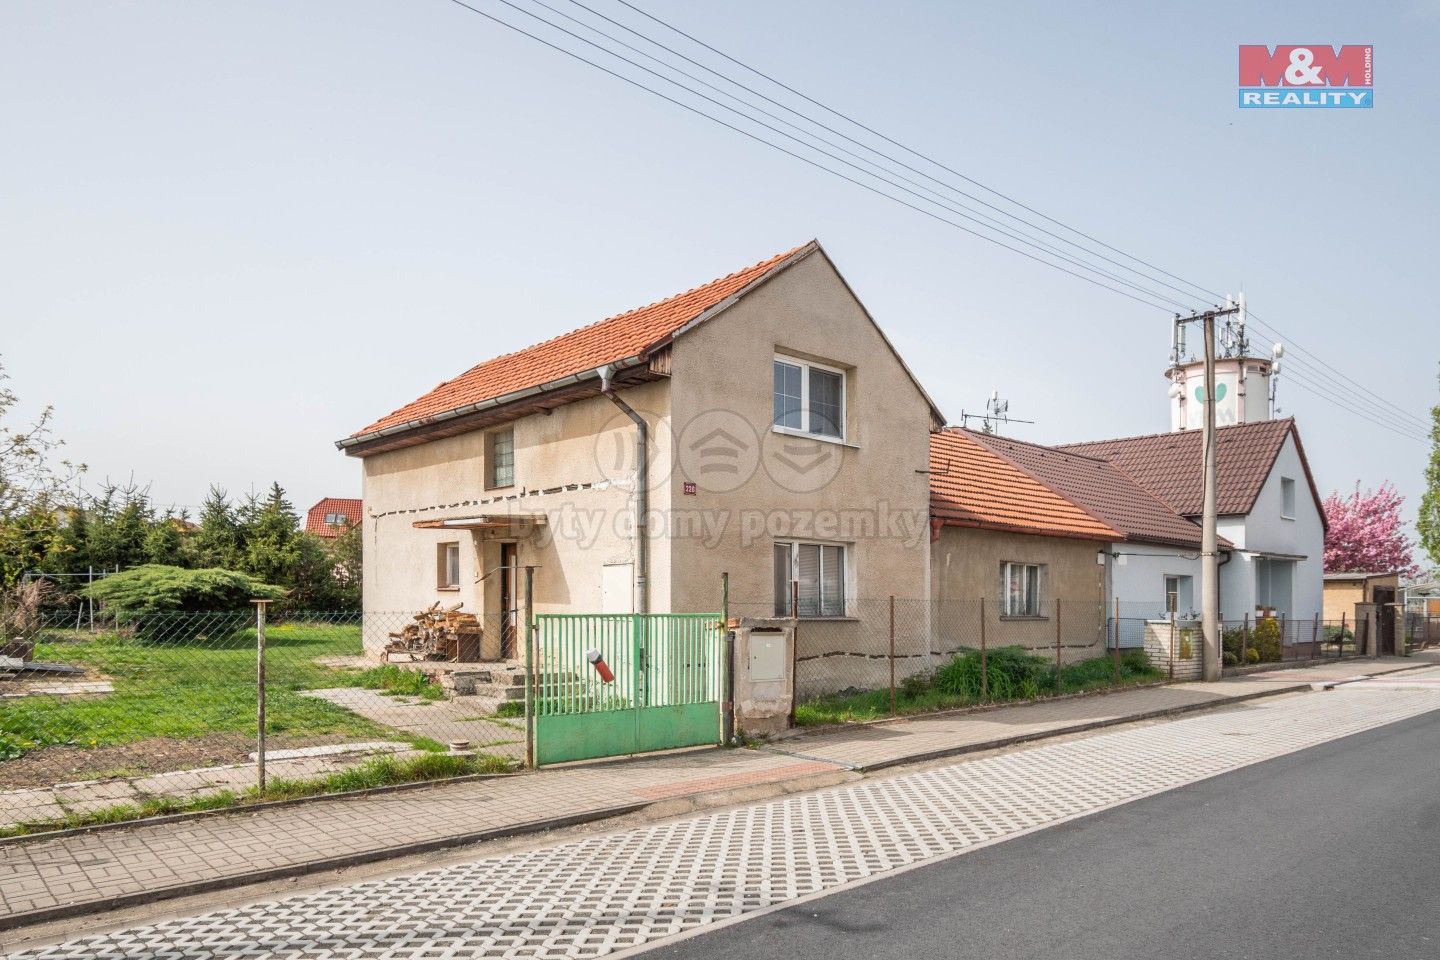 Rodinné domy, třída Rudé armády, Cvrčovice, 103 m²